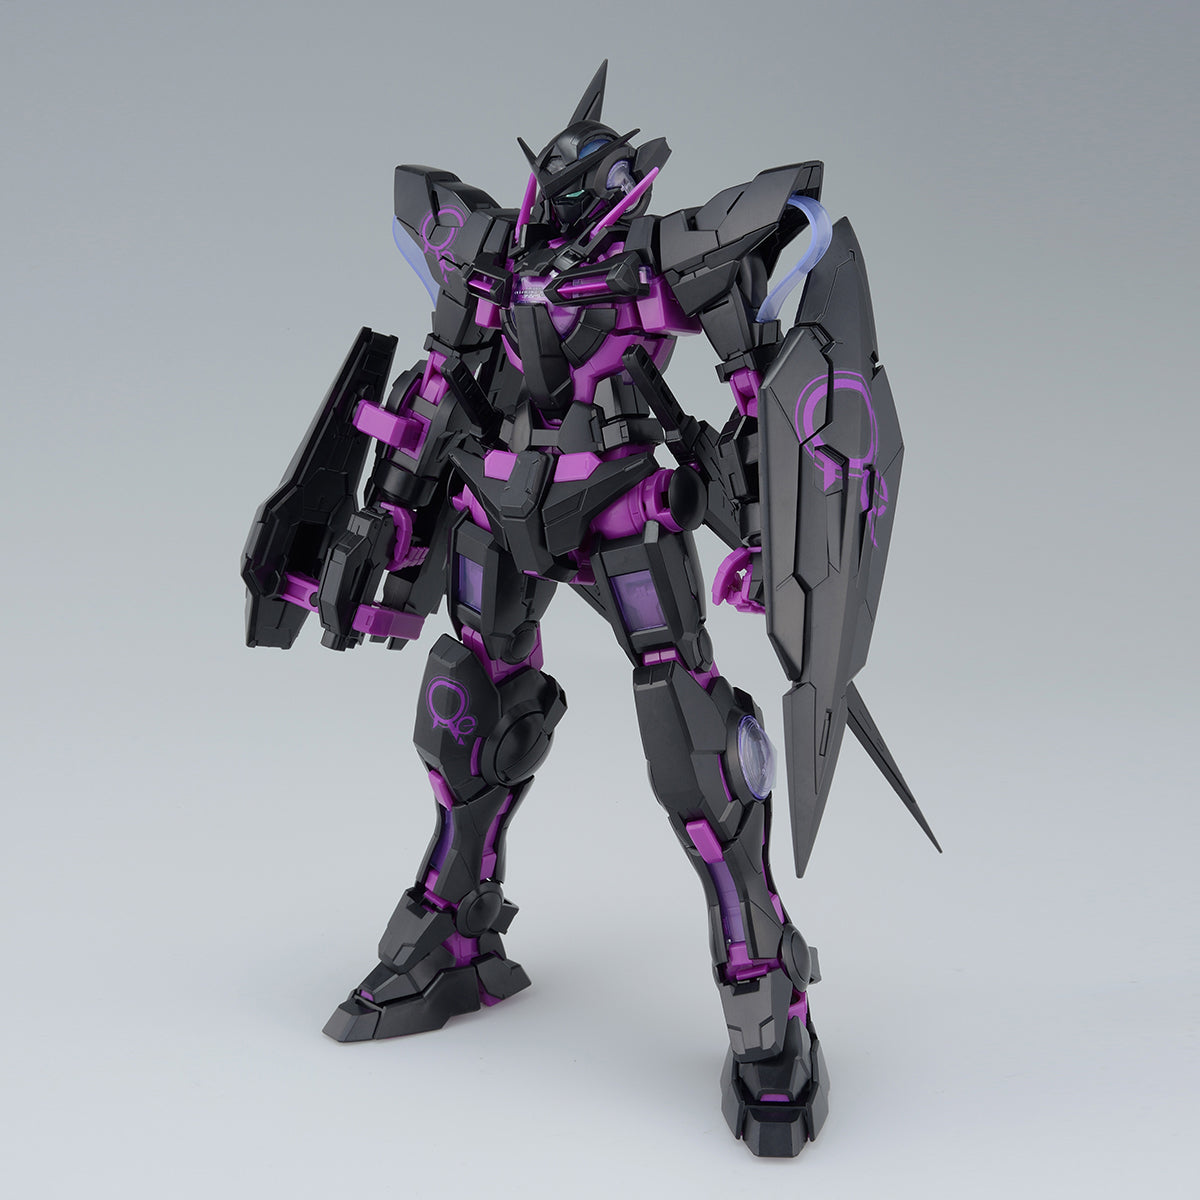 PREVENTA MG 1/100 GN-001 Gundam Exia (Recirculation color/neon purple) Gundam